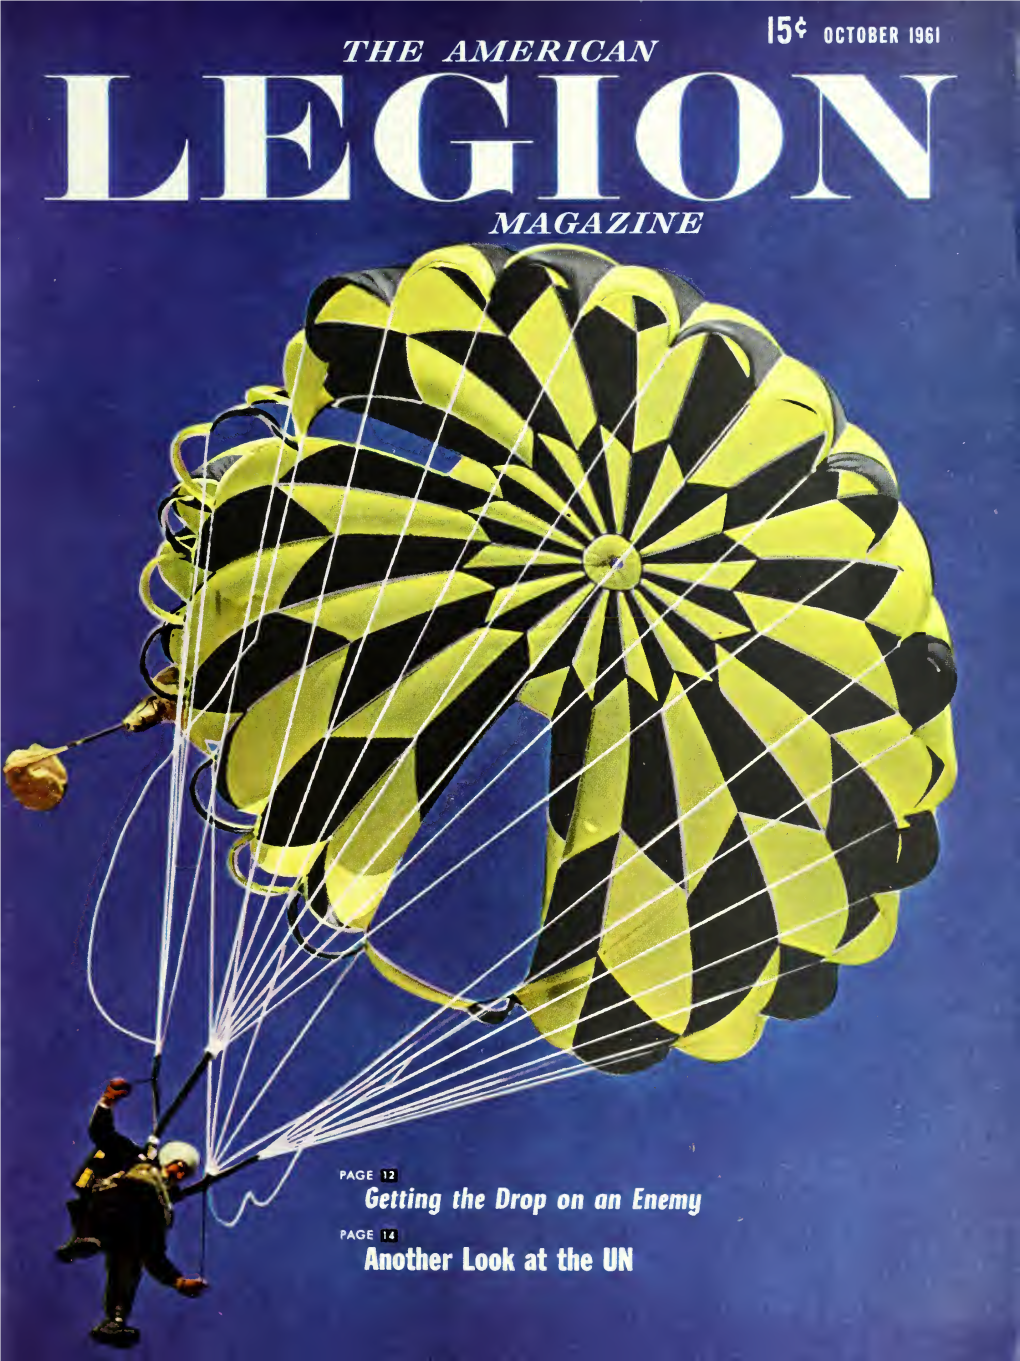 The American Legion Magazine [Volume 71, No. 4 (October 1961)]